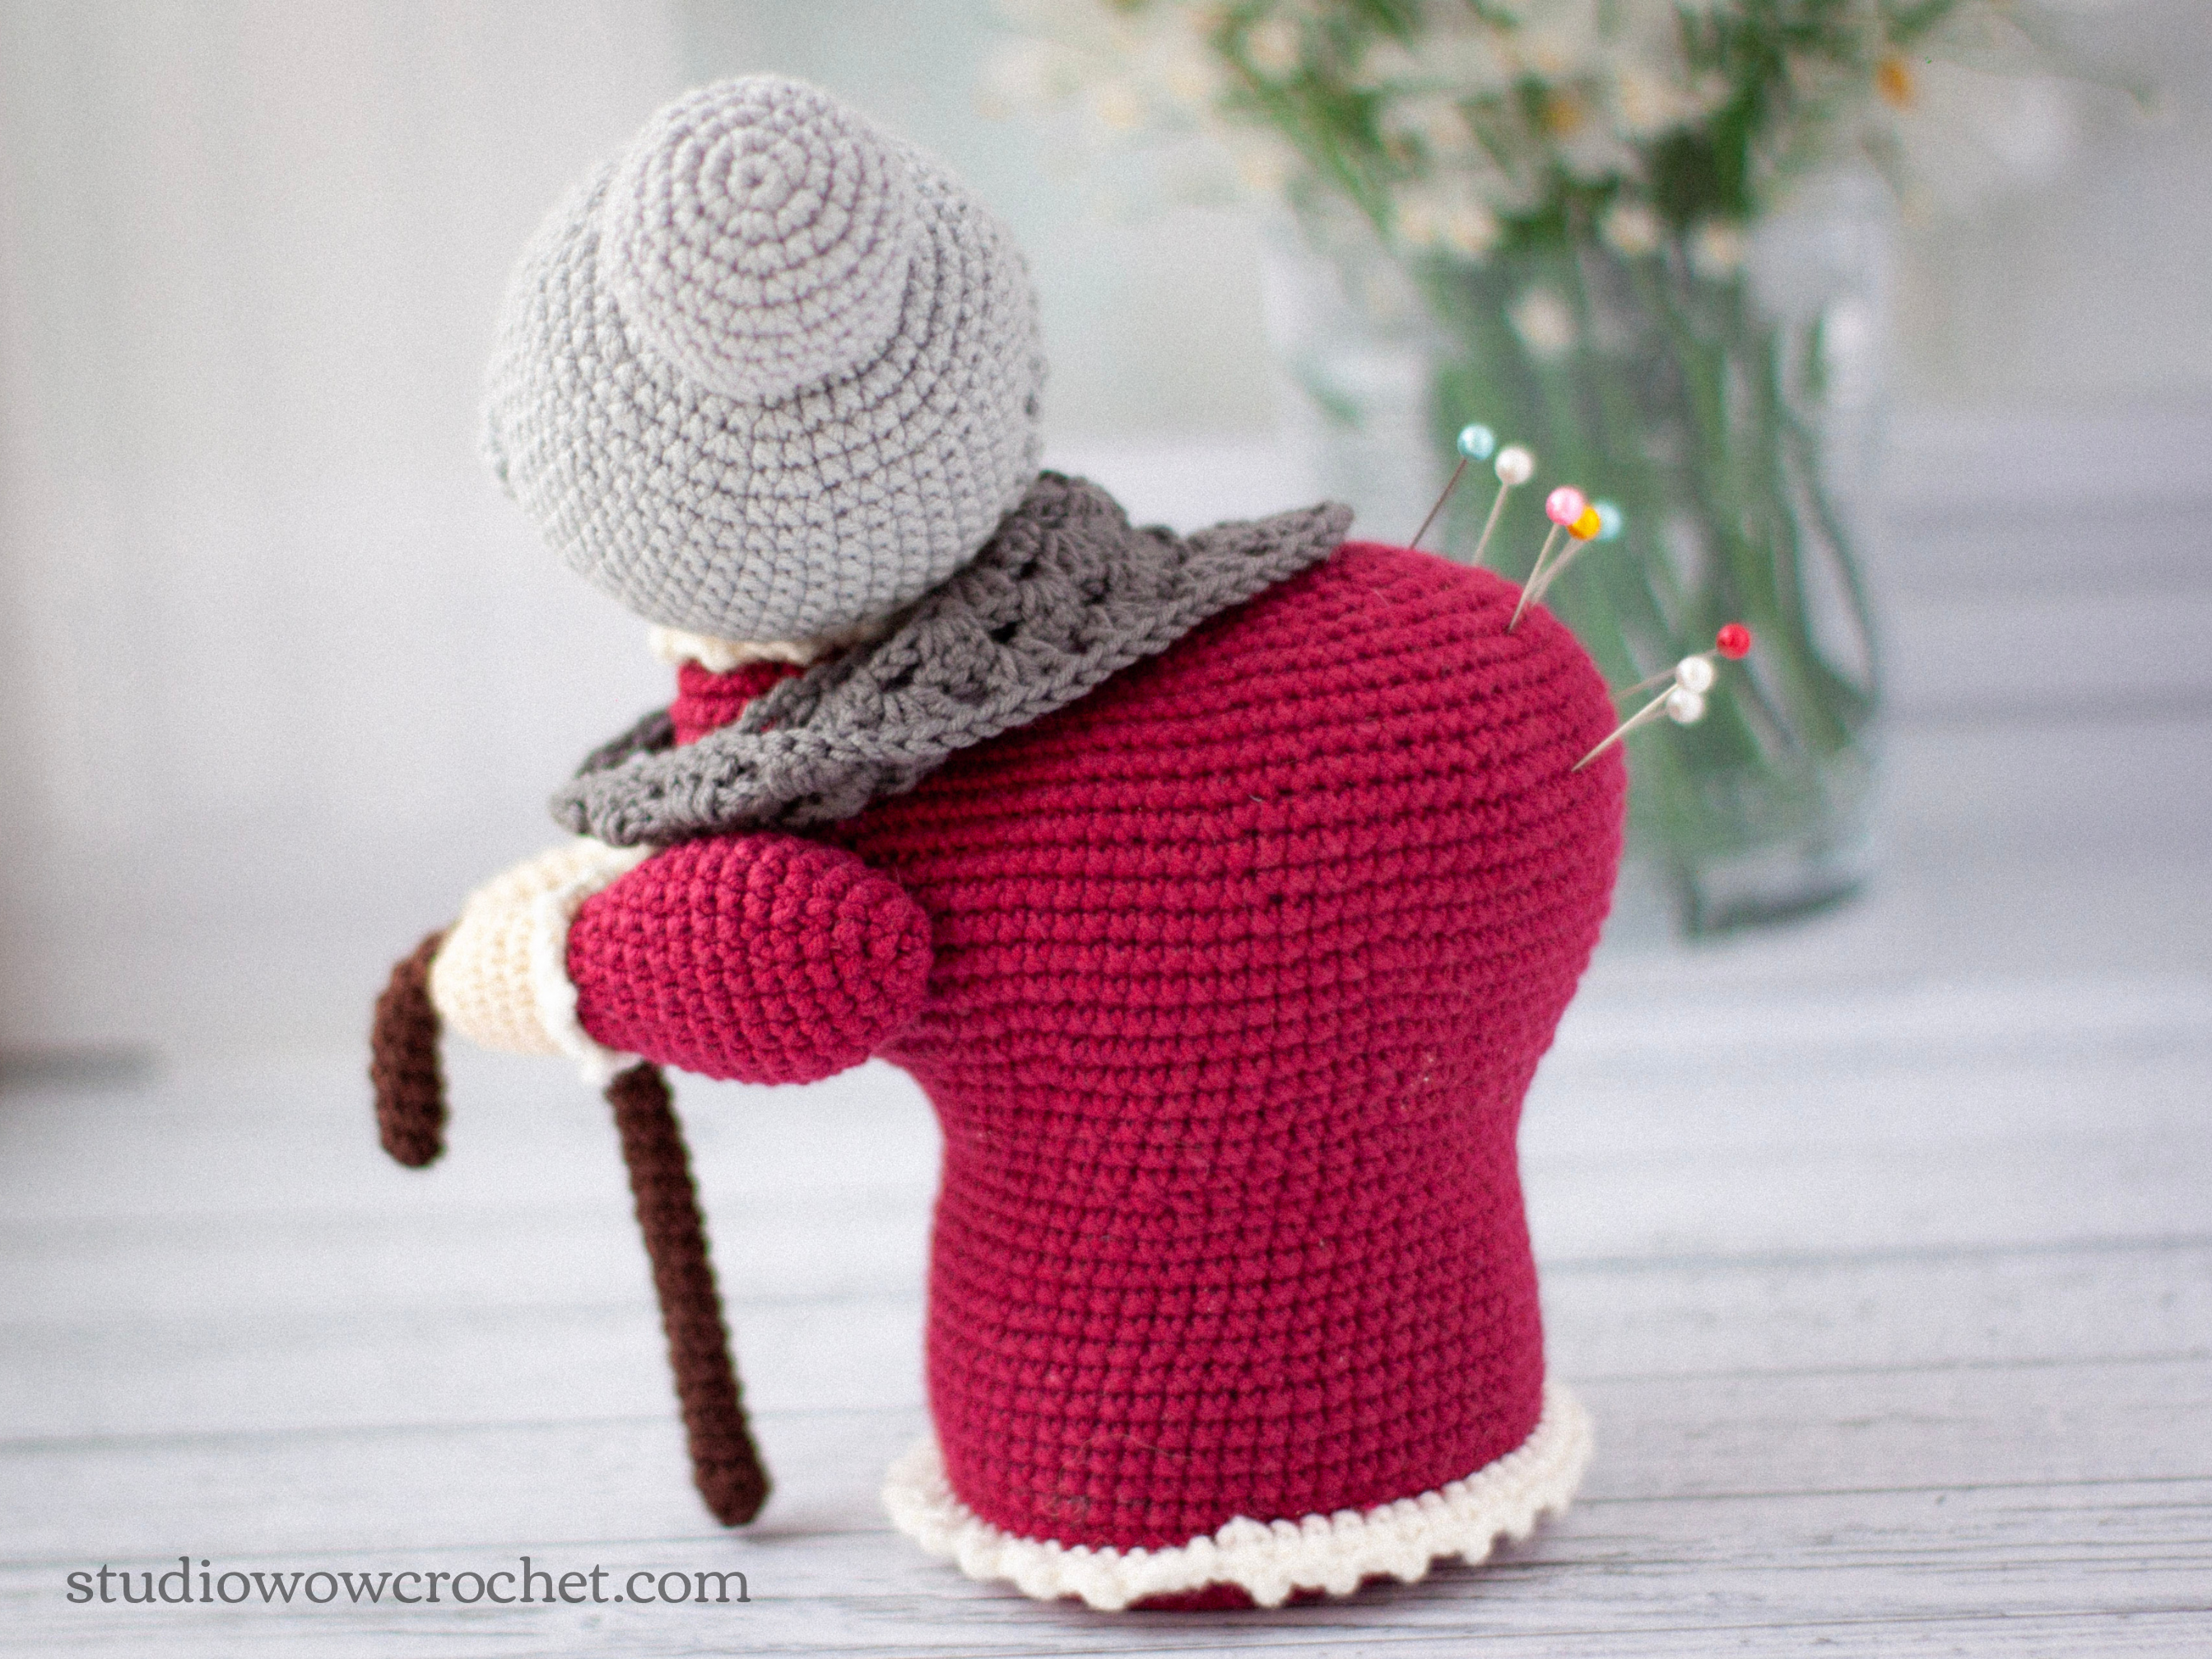 Granny/Grandma Crochet Pattern Amigurumi Pin Cushion English (US terms), Spanish, Italian, French, German, Portuguese, Ukranian - DIY Crochet Project for Home Decor / Instant Download